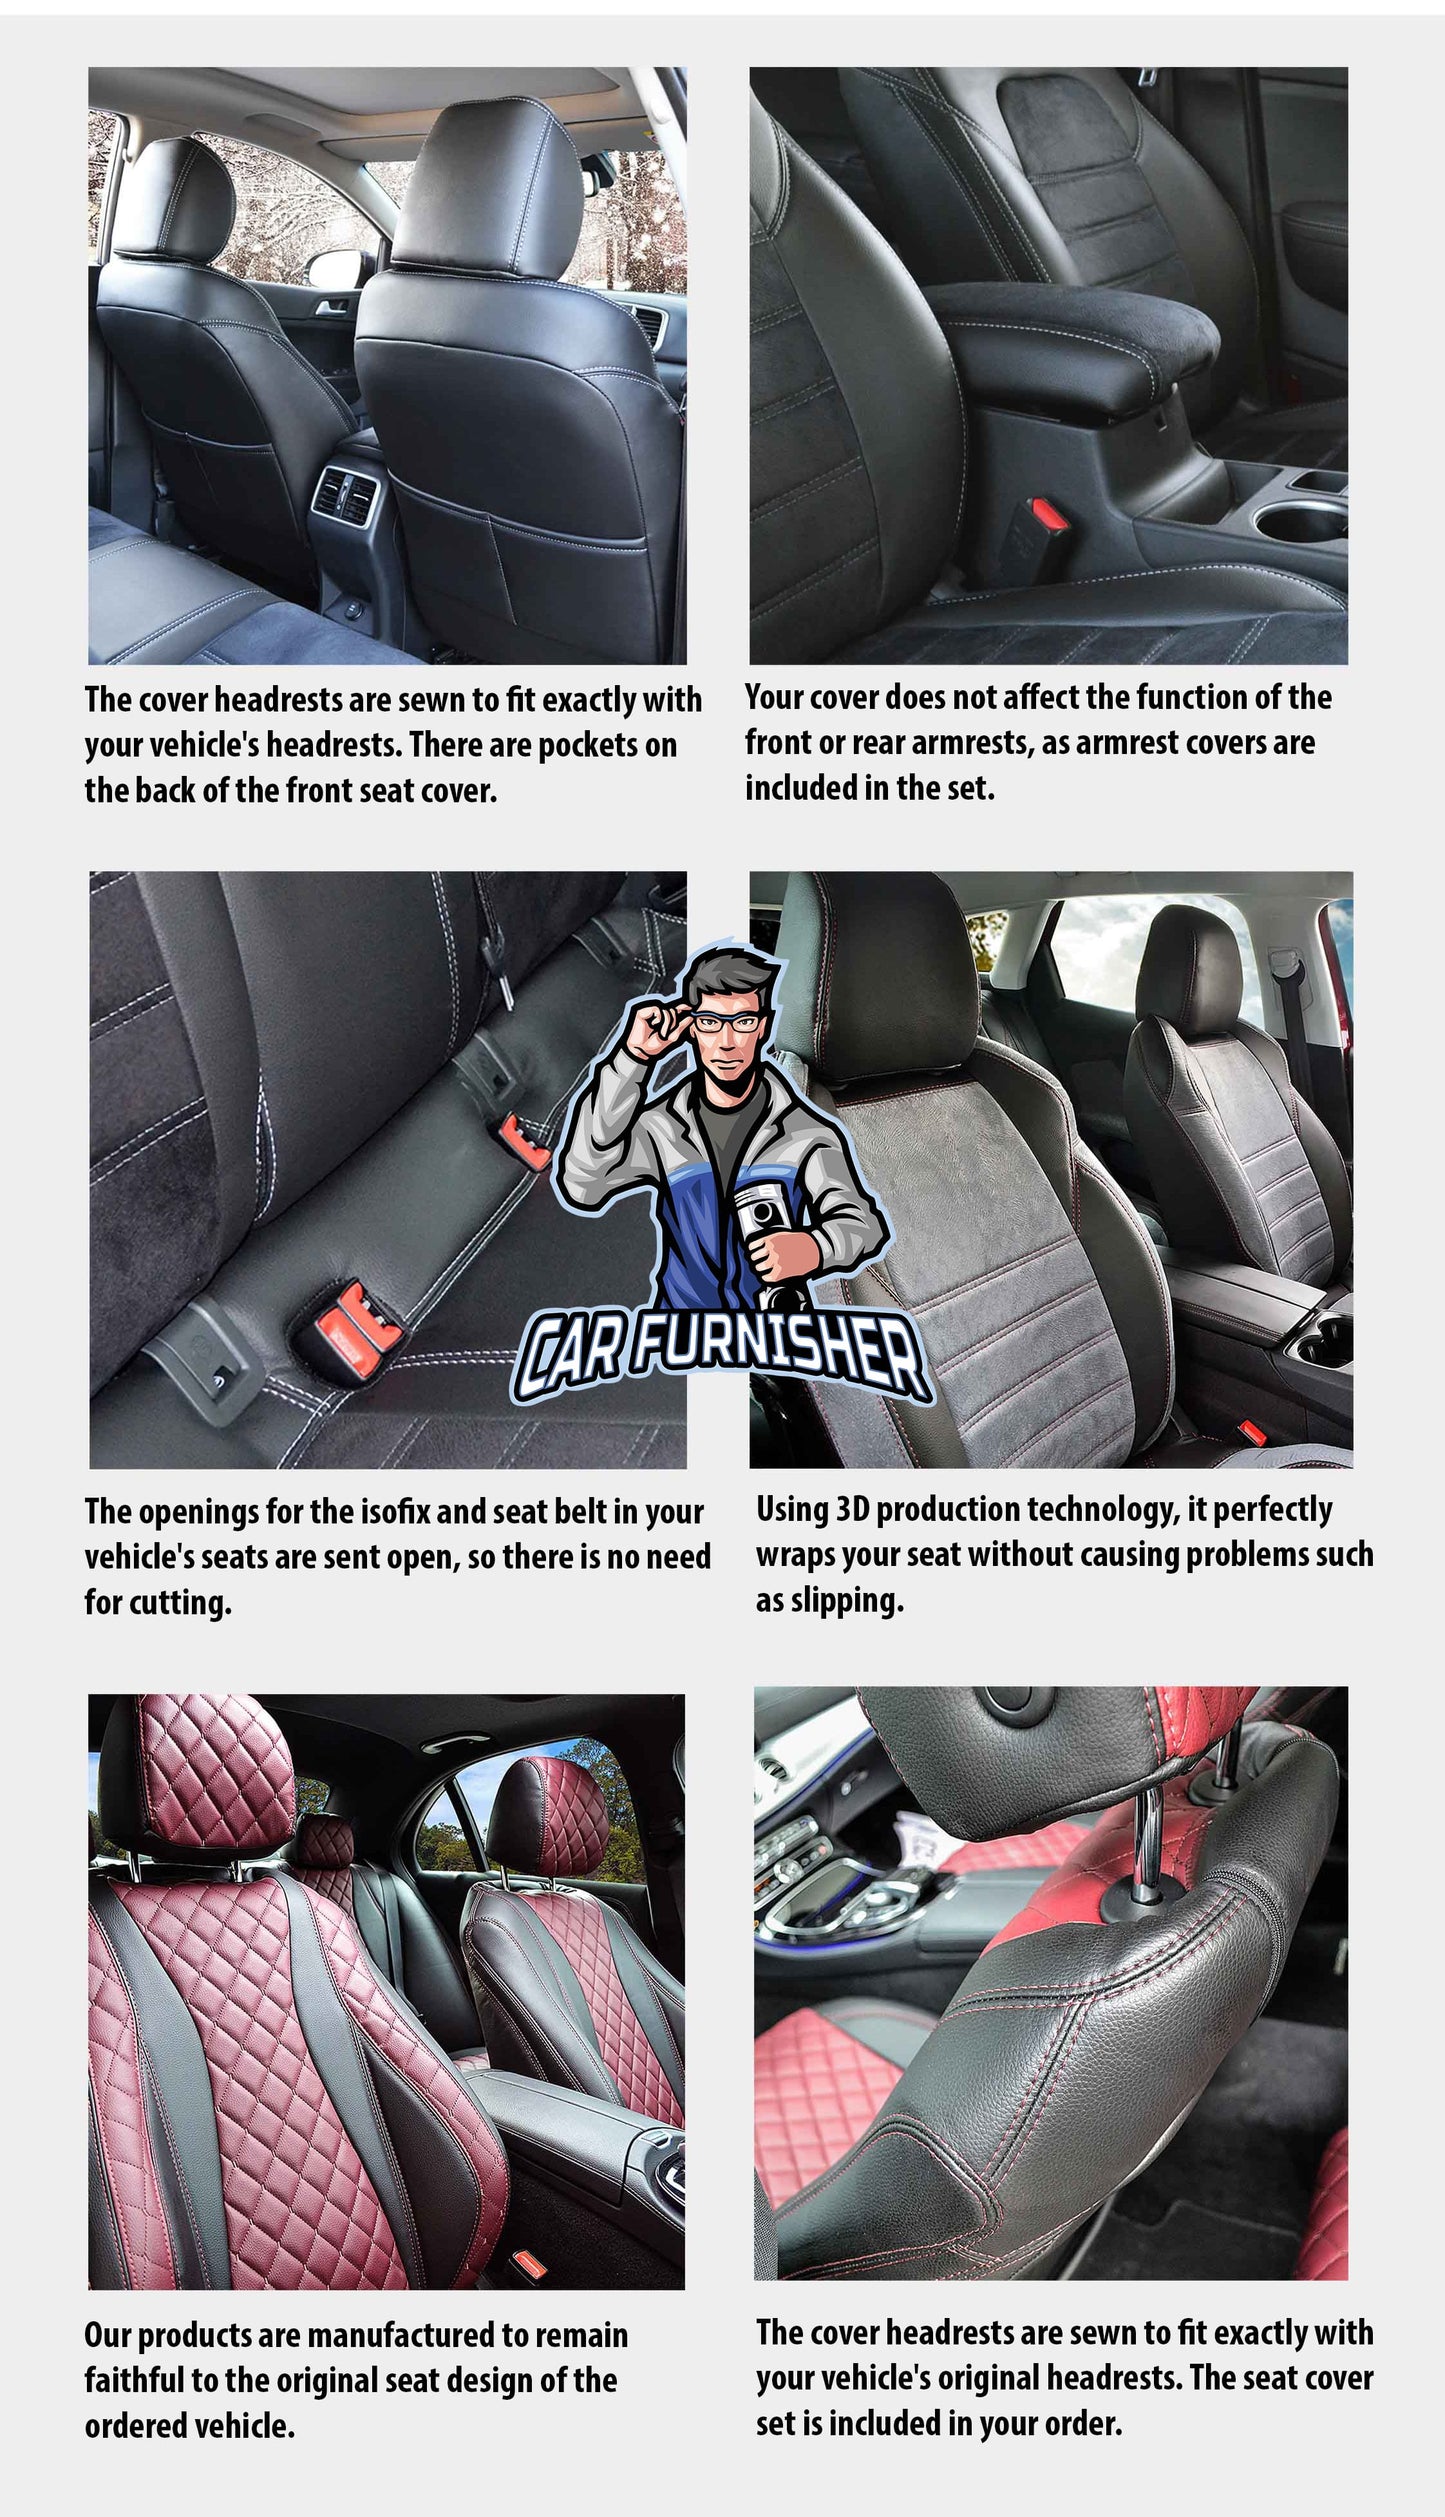 Peugeot 206 Seat Covers Paris Leather & Jacquard Design Black Leather & Jacquard Fabric